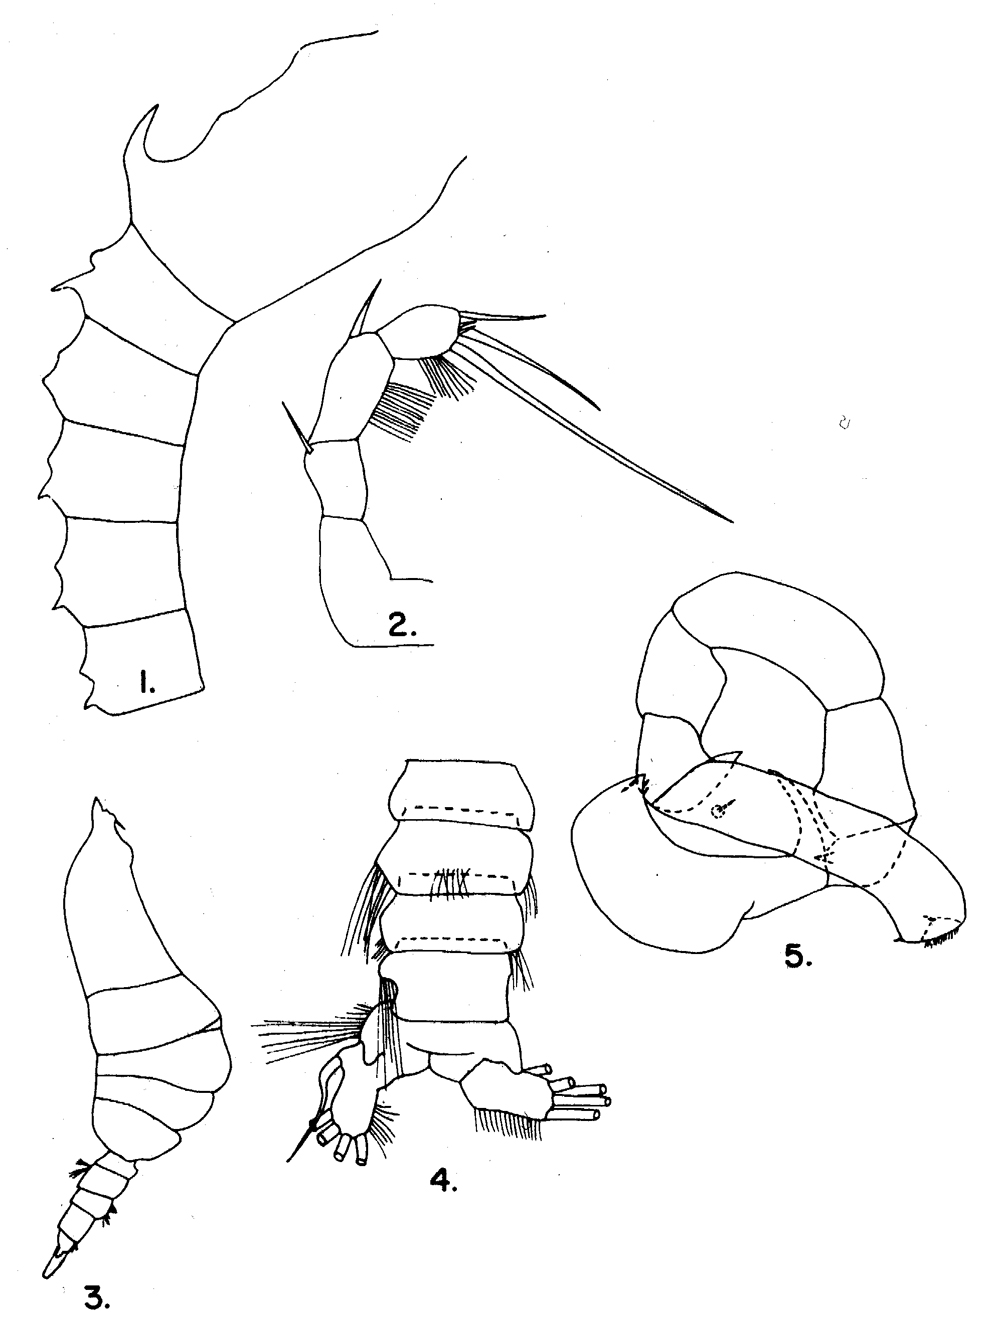 Species Pleuromamma xiphias - Plate 33 of morphological figures